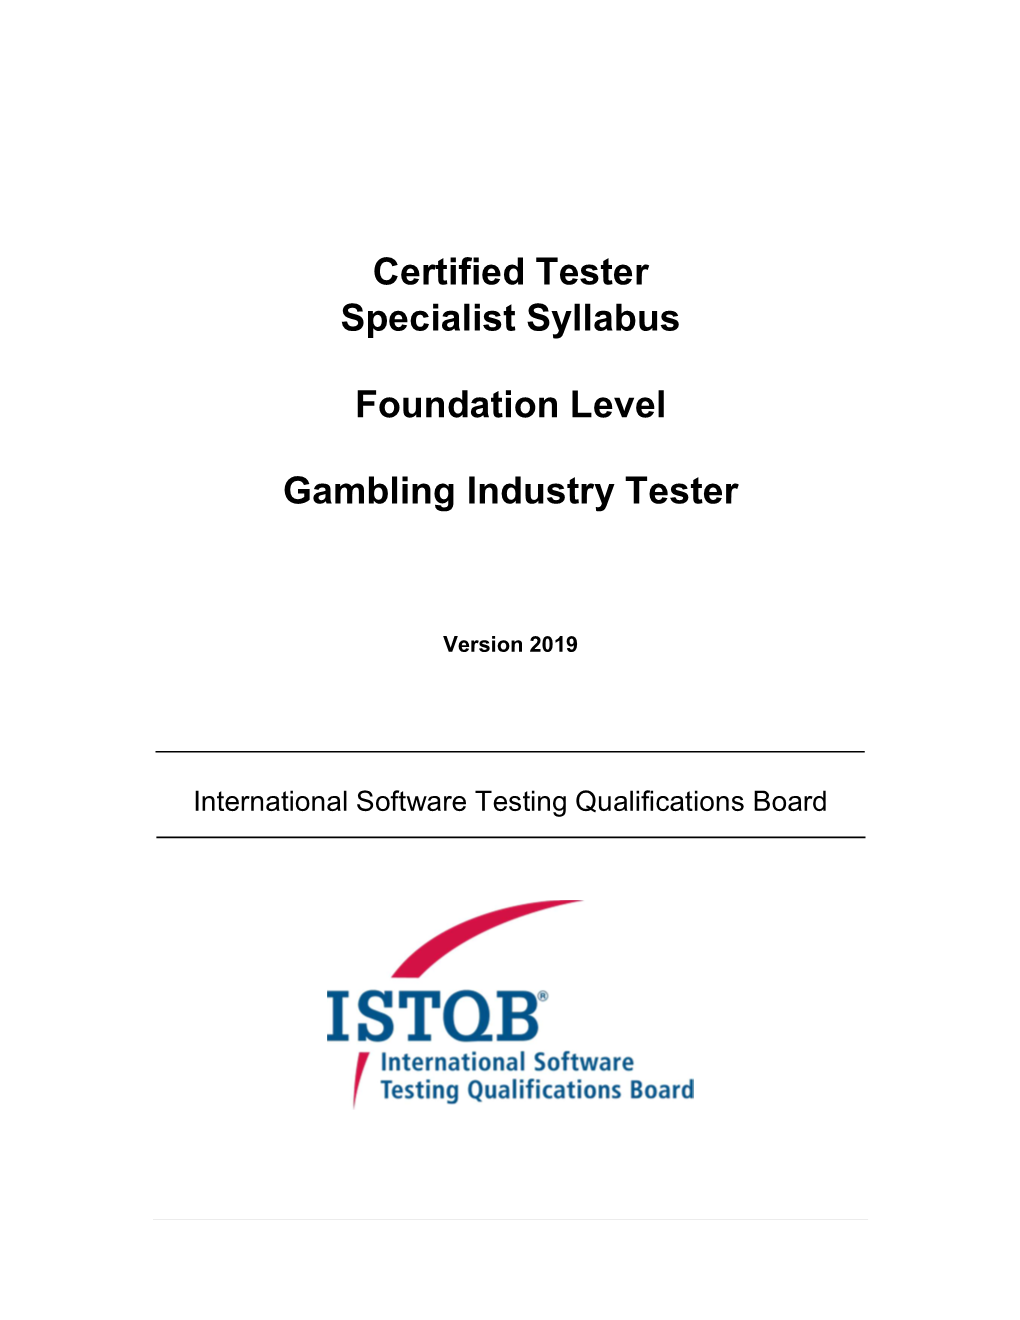 Gambling Industry Tester Specialist Syllabus V2019